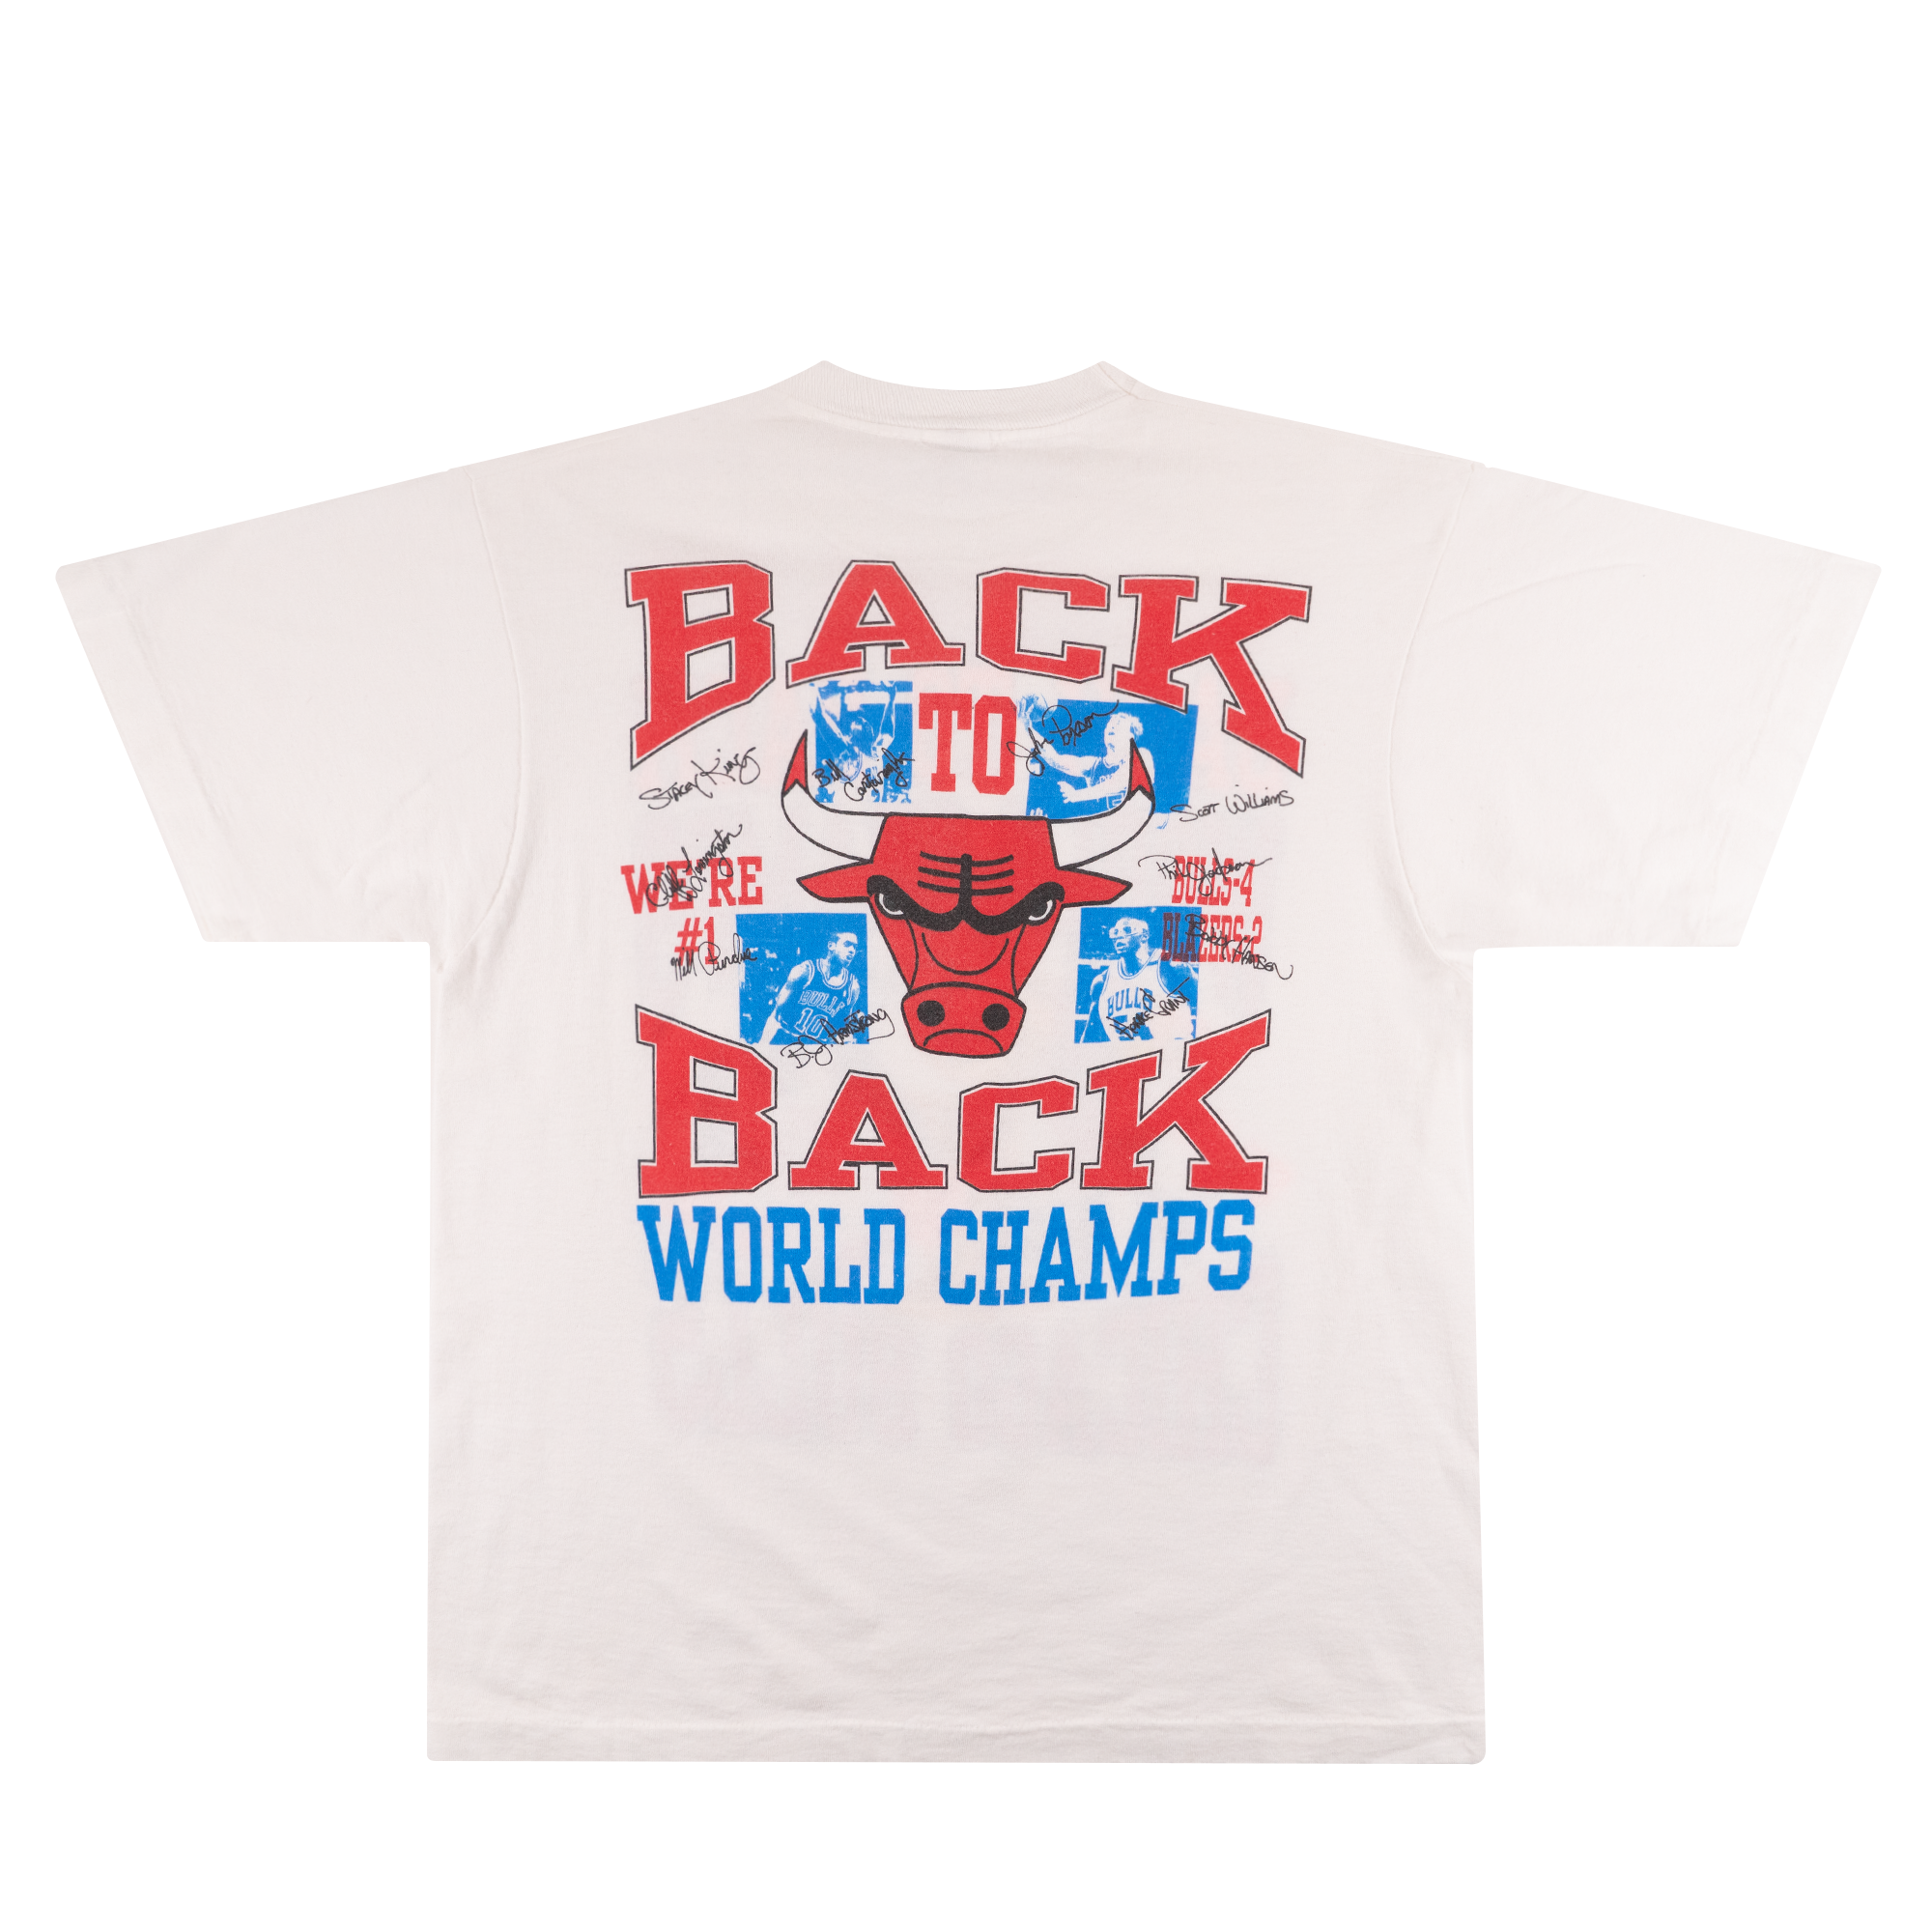 Chicago Bulls "Back To Back World Champs" Bootleg Style NBA Tee White-PLUS